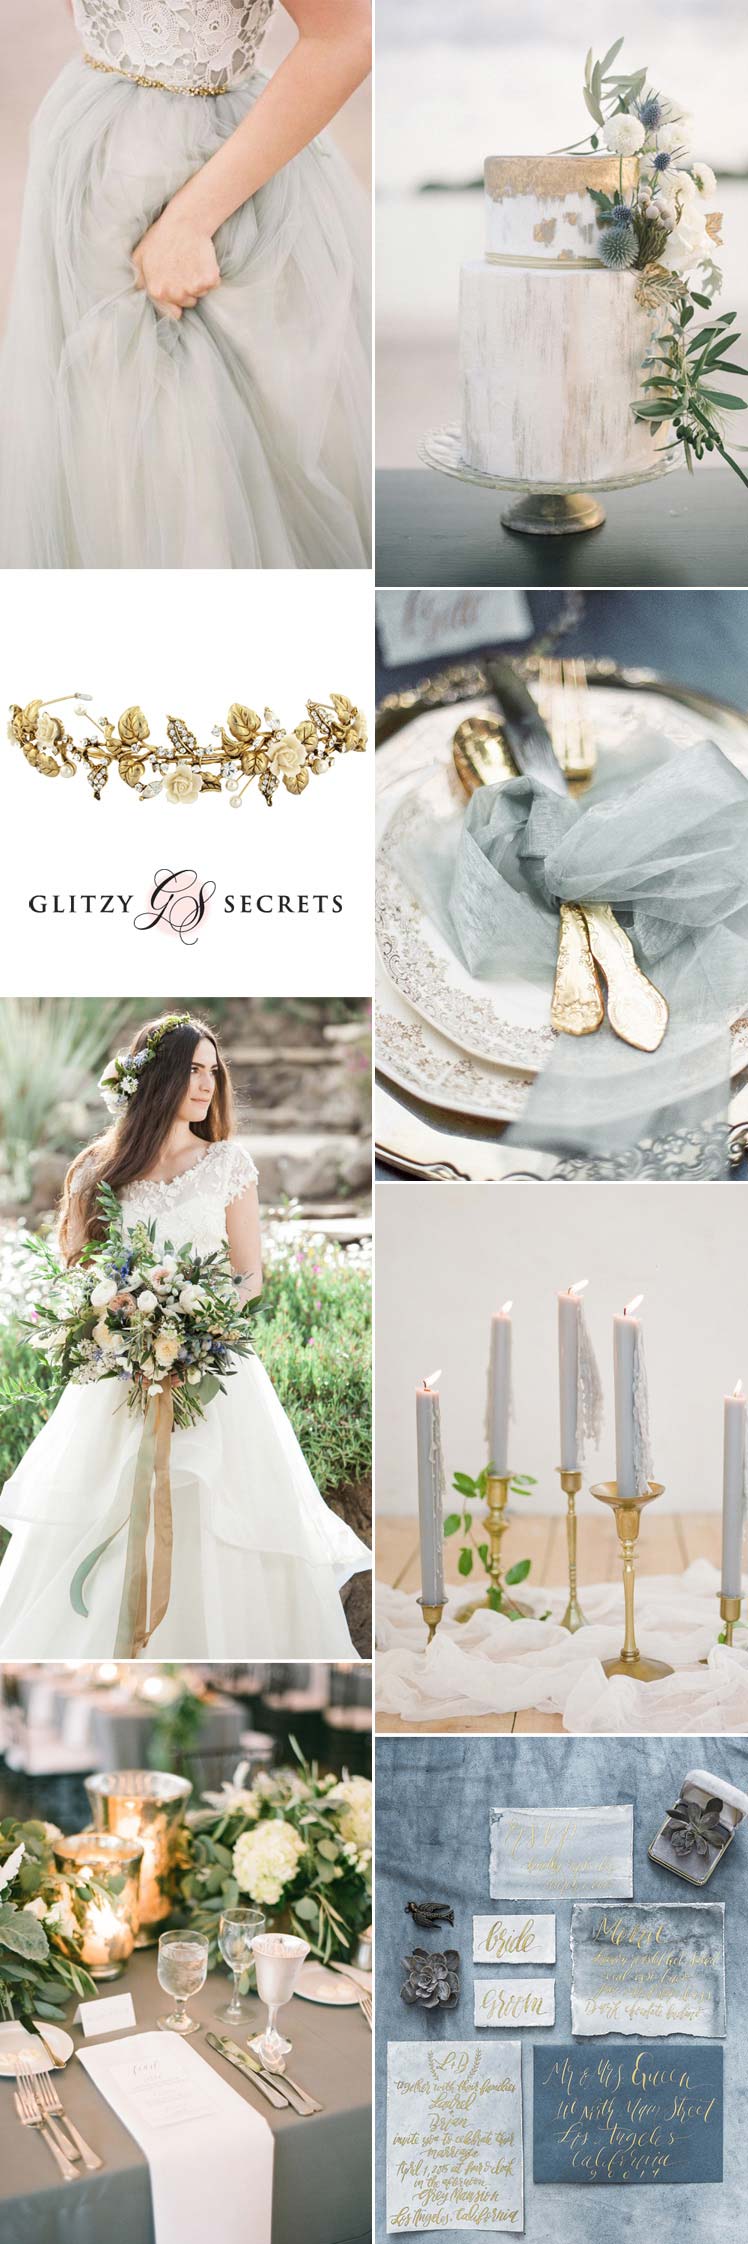 Grey and gold wedding inspiration